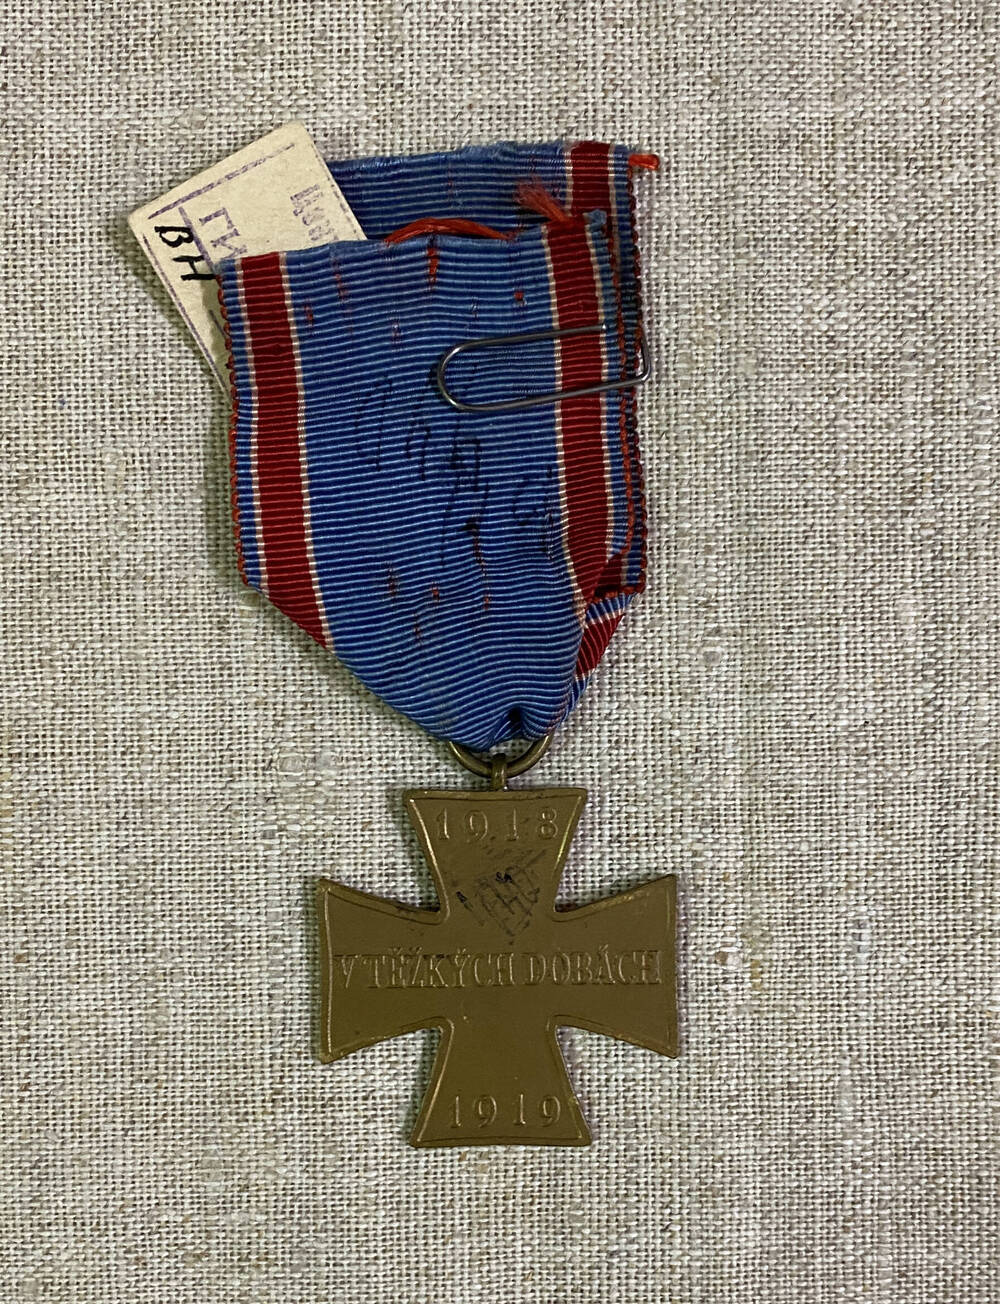 Орден в форме креста  с изображением эмблемы ЧССР - на аверсе; на реверсе - цифры 1918-1919, текст,  на муаровой ленте